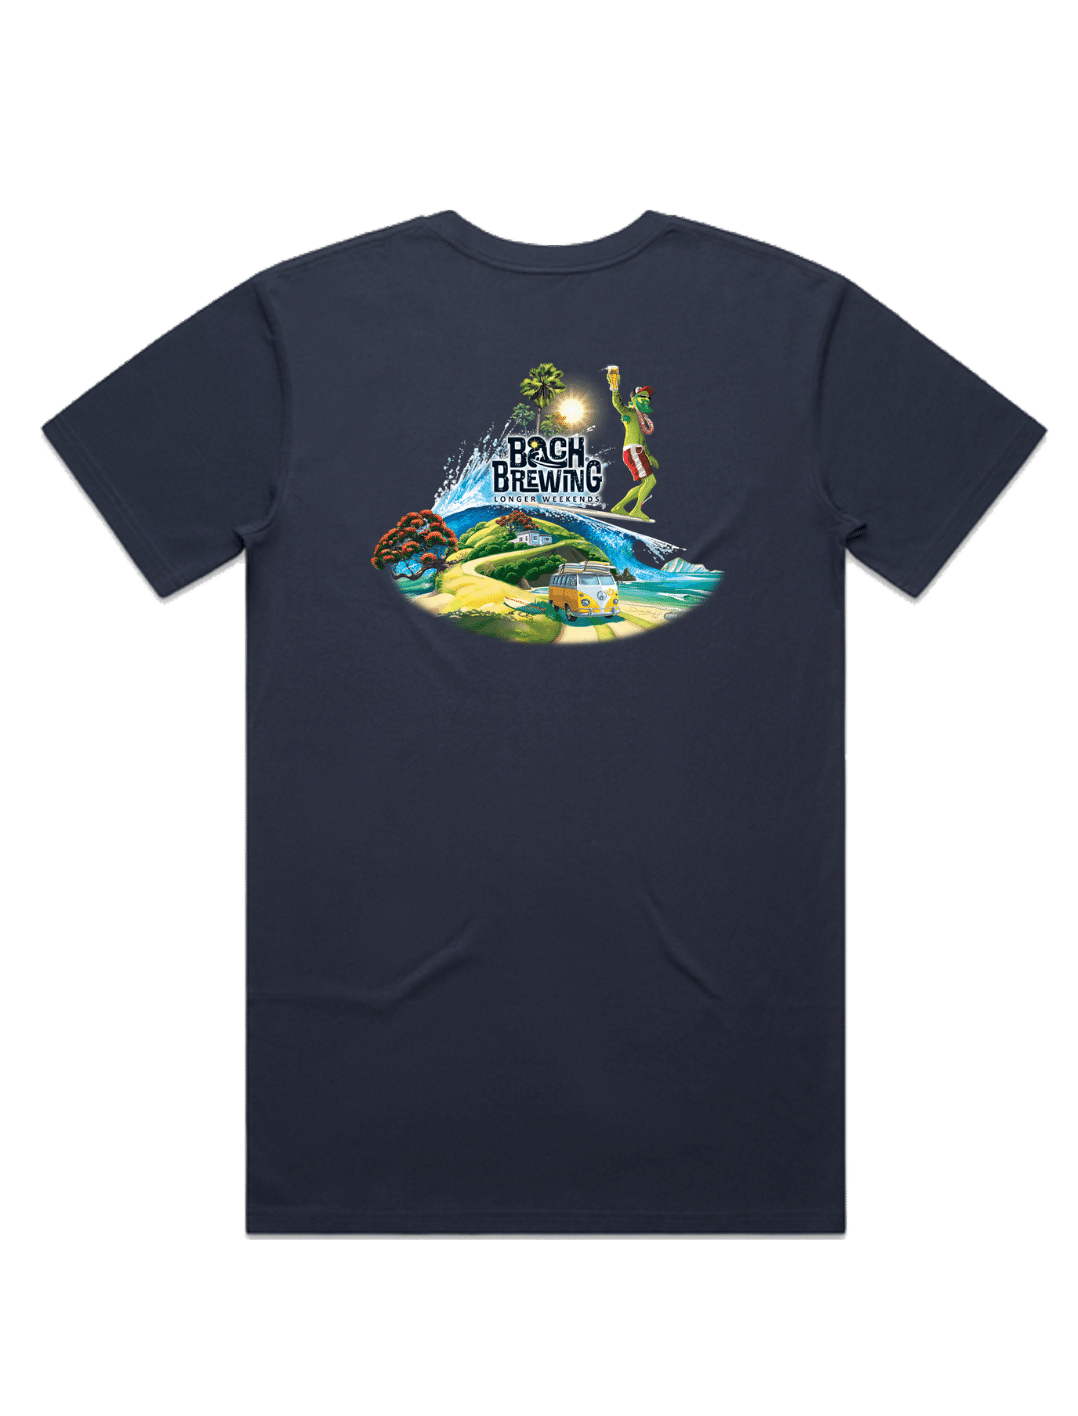 Bach Brewing Mens T-shirt - Beach Scene (back graphic)